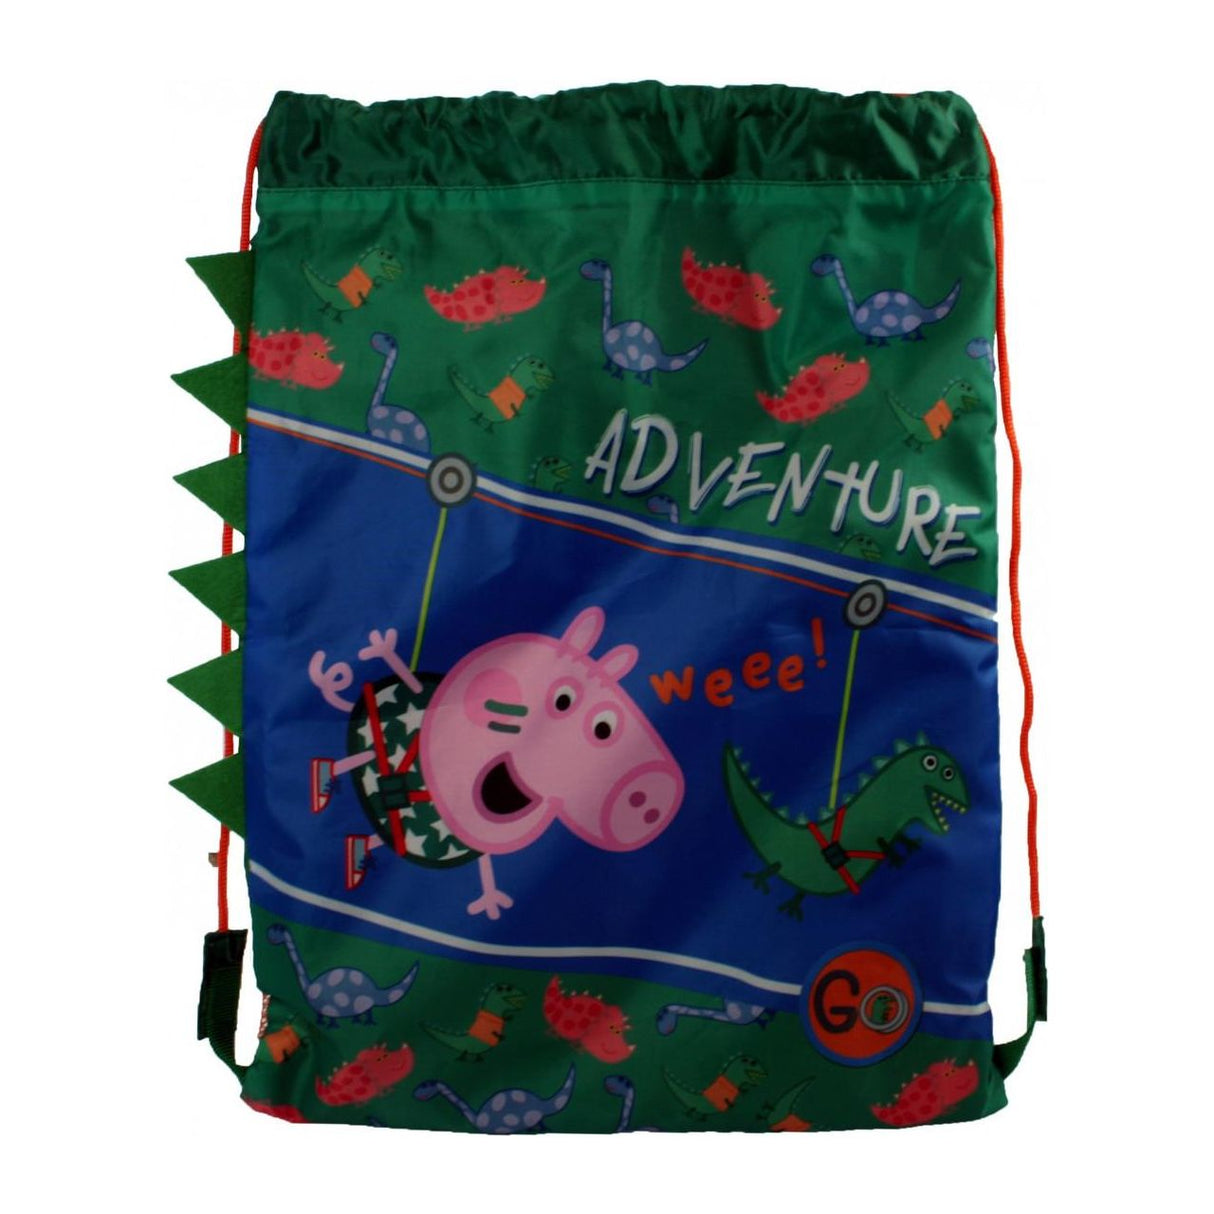 Peppa Pig George Go Adventure Dino Drawstring PE Bag